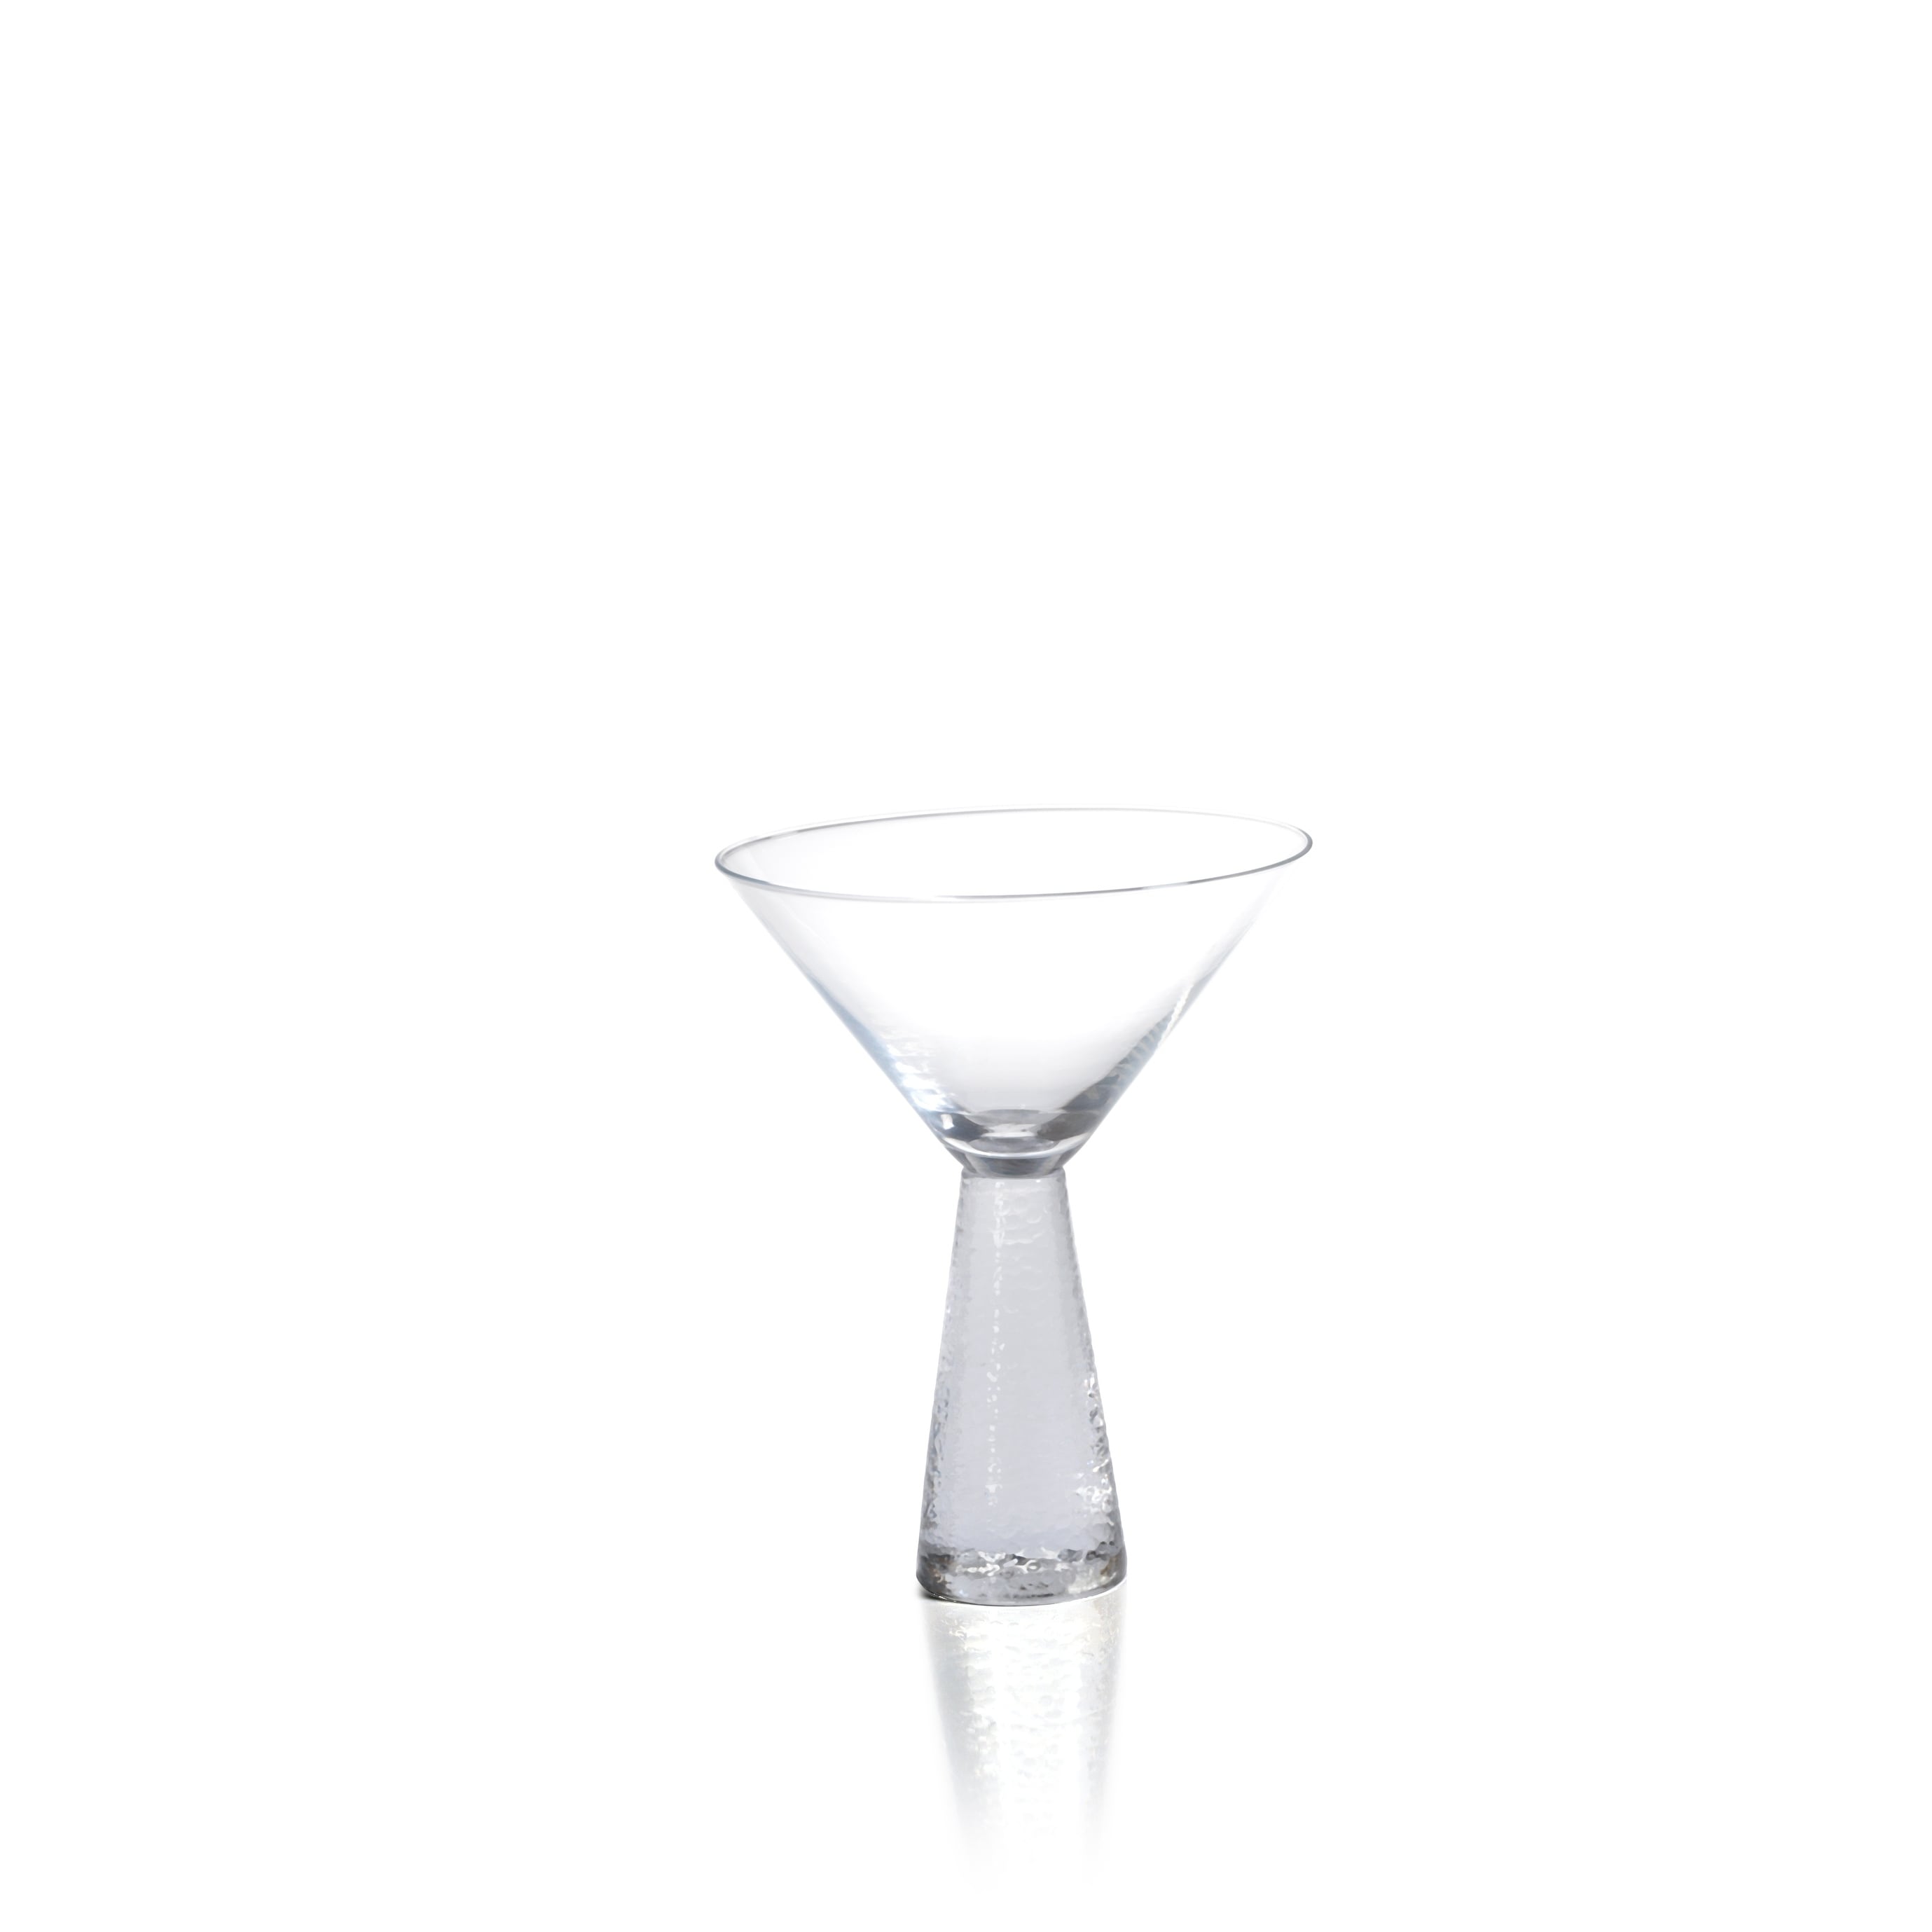 Zodax Kampari Triangular Martini Glasses with Gold Rim Set of 4